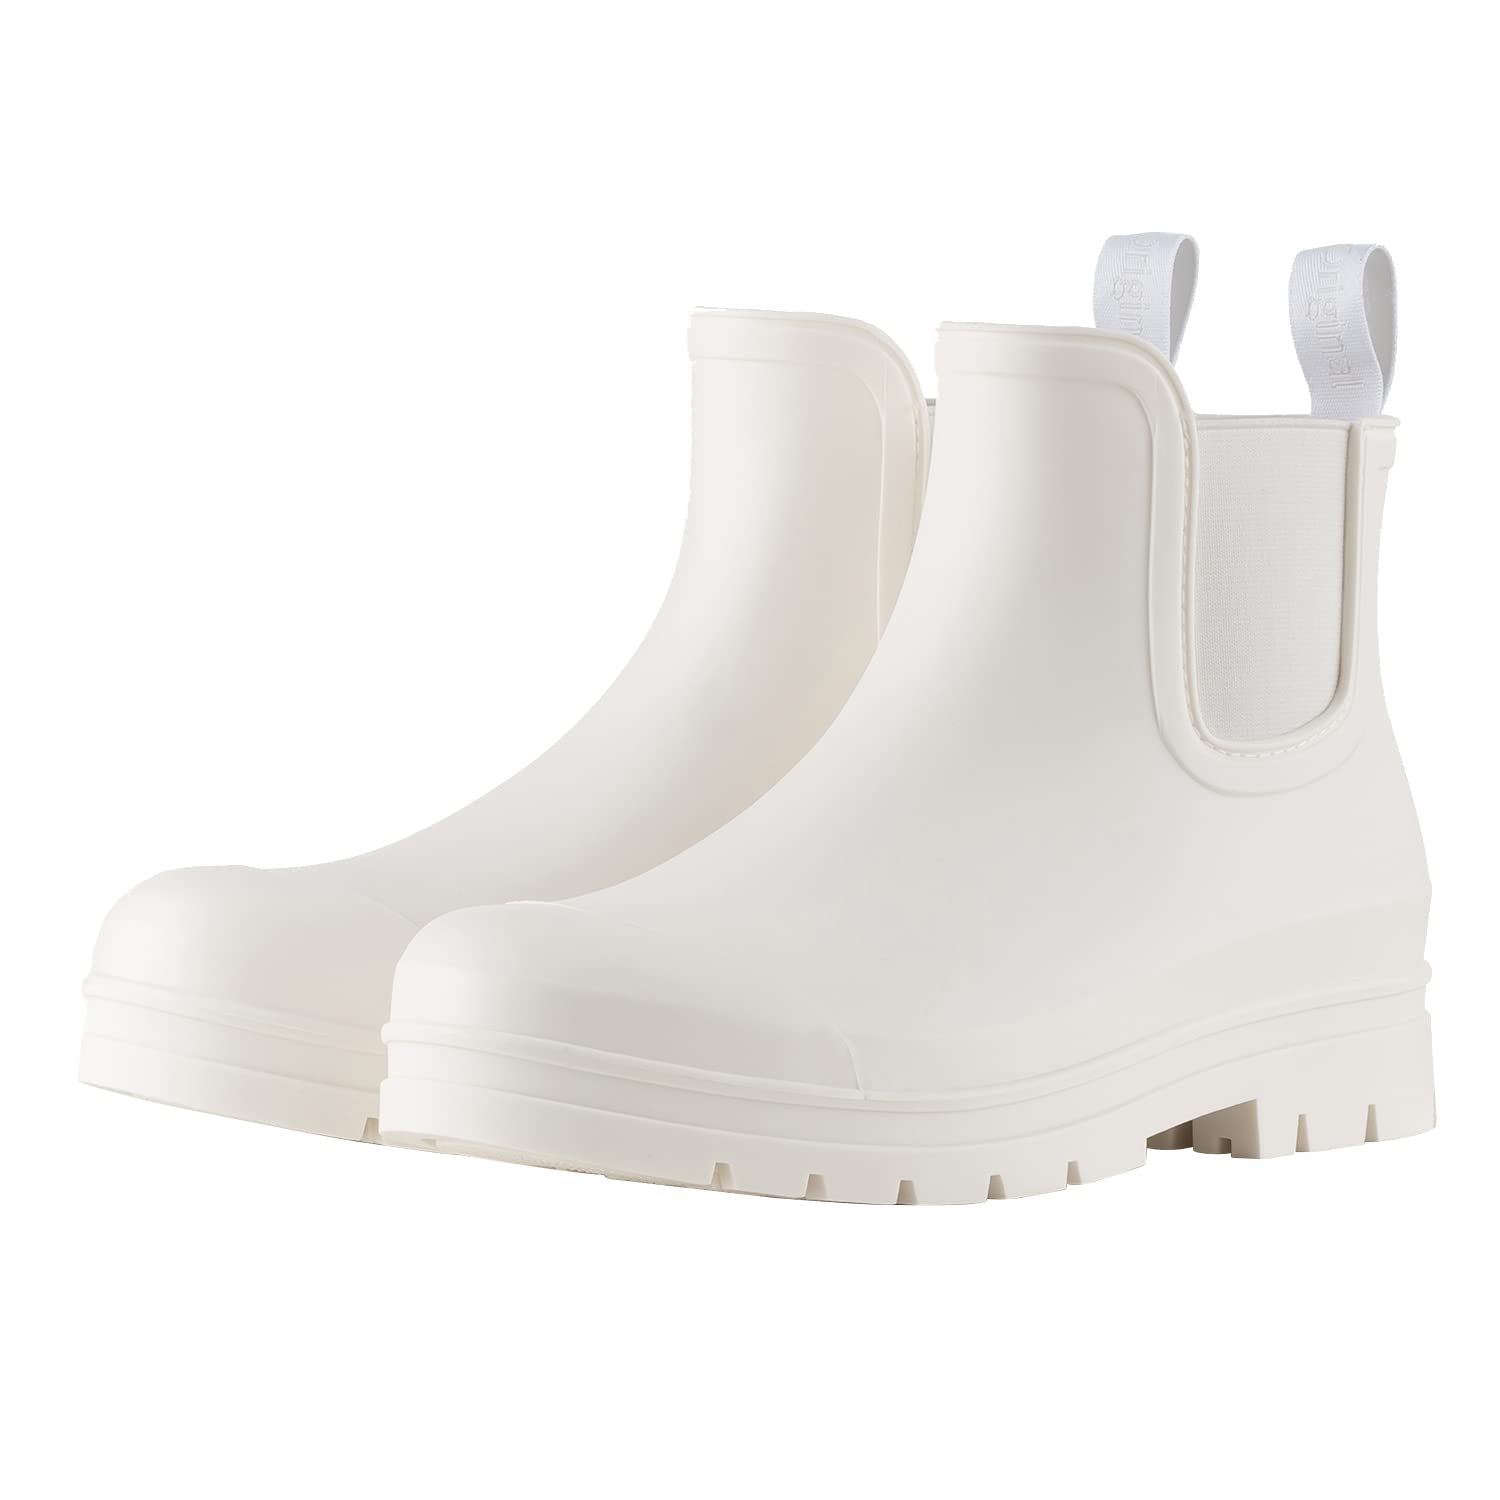 Planone Short Rain Boots For Women Waterproof Size 6 Cream White Garden Shoes Anti-Slipping Chelsea Rainboots For Ladies Comfort